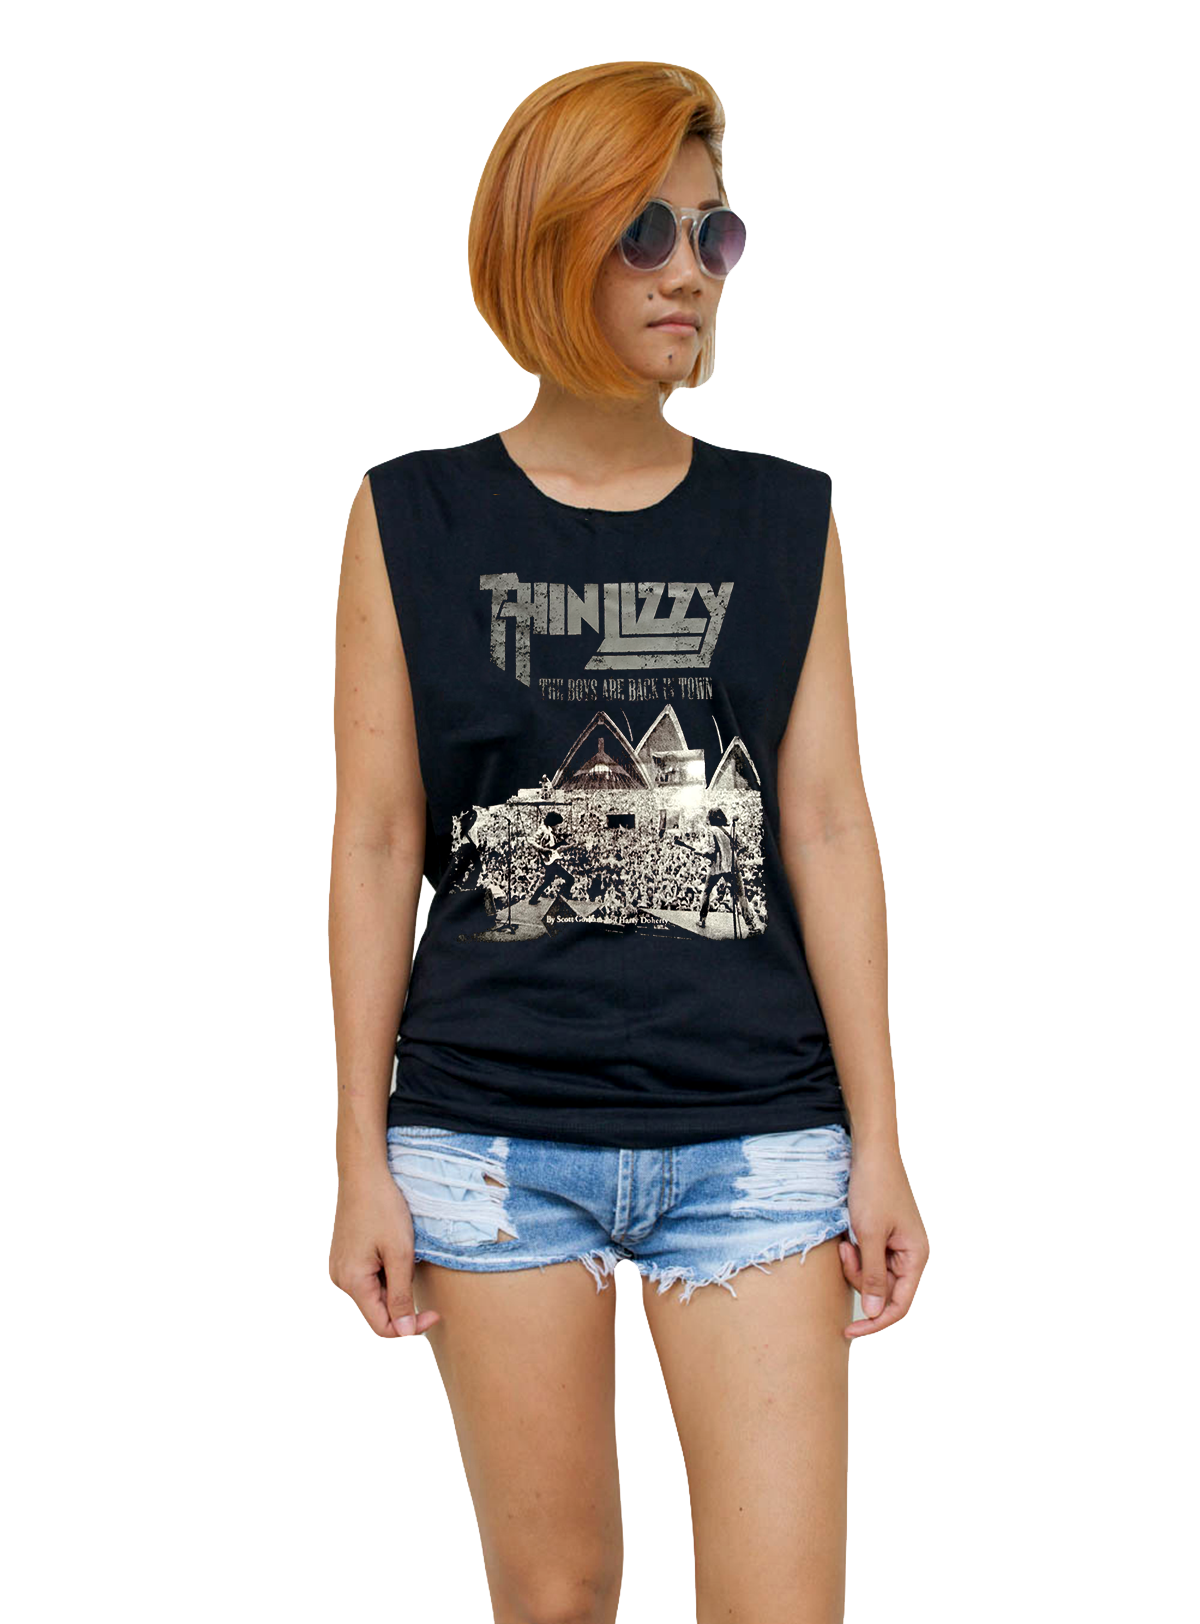 Ladies Thin Lizzy Vest Tank-Top Singlet Sleeveless T-Shirt